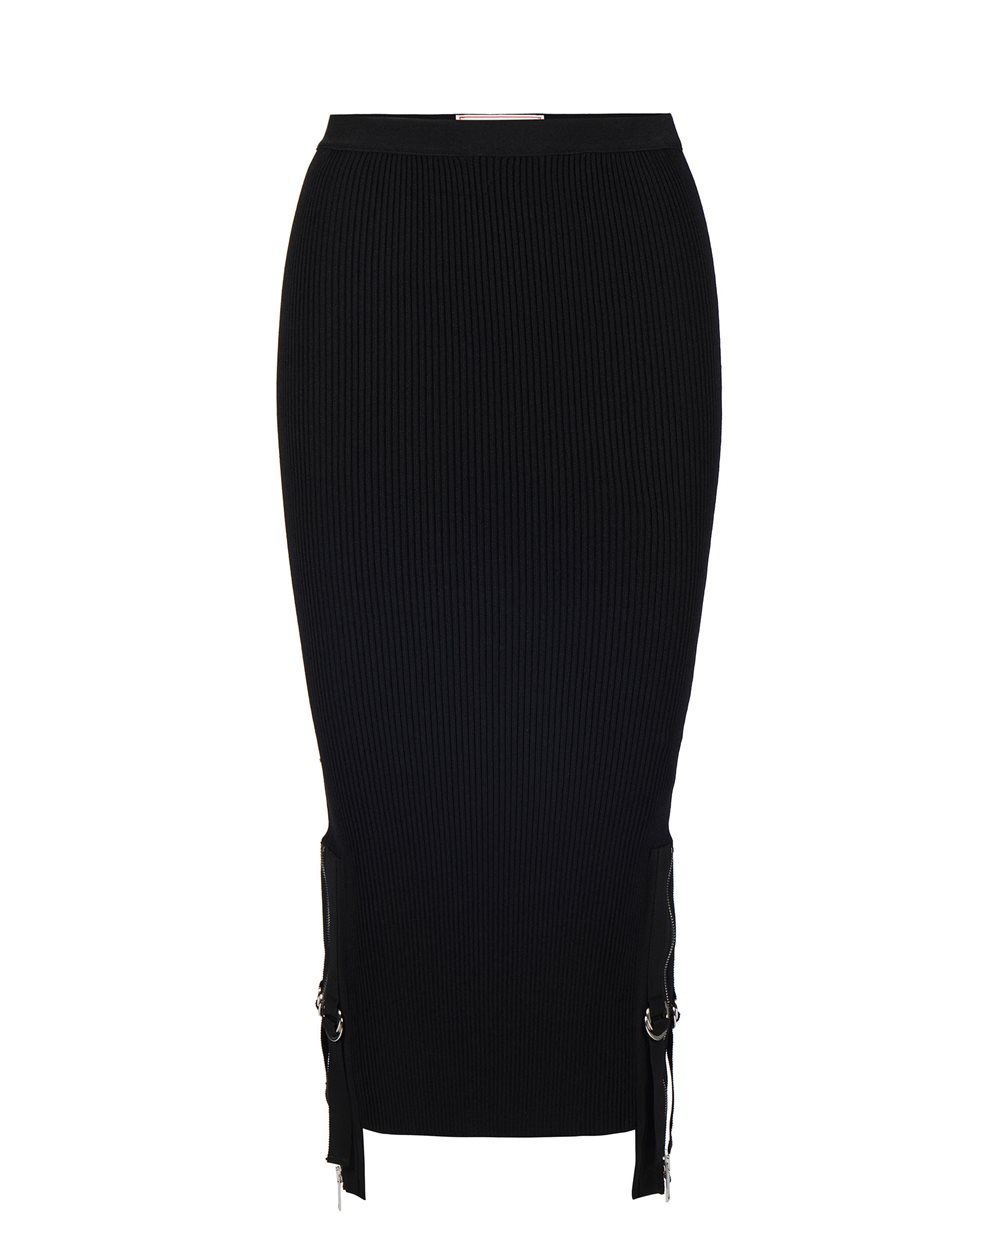 Black pencil skirt - Fashion Show Woman | Iceberg - Official Website